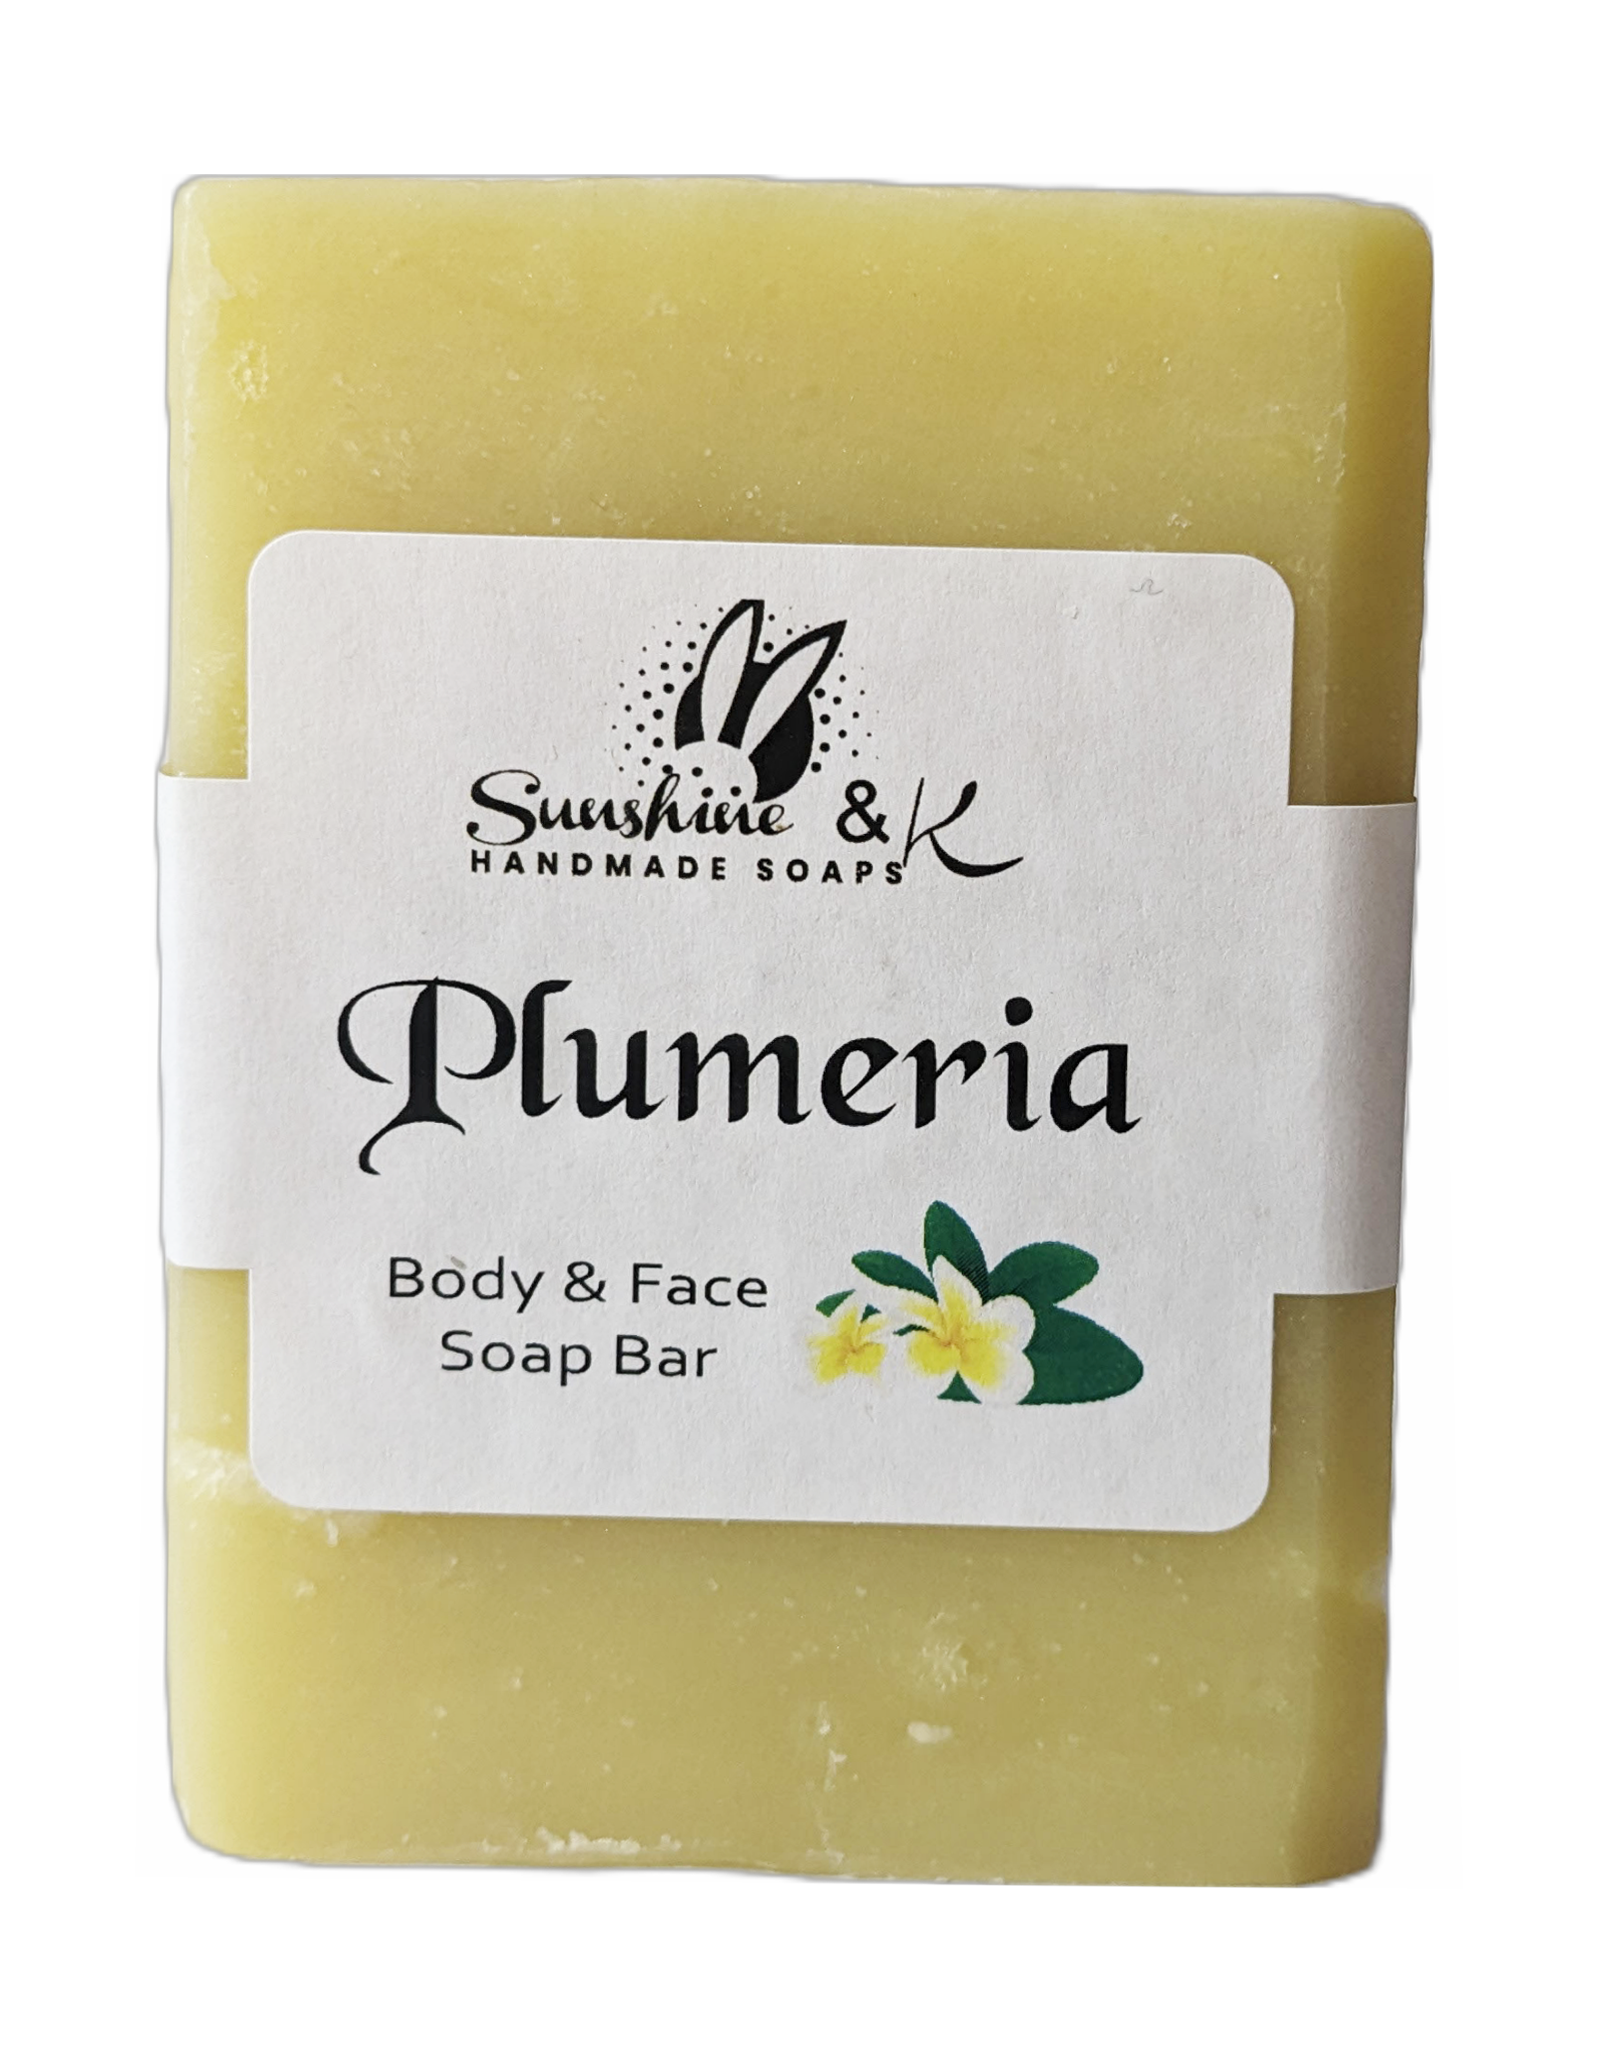 Plumeria Bar Soap - Body & Face Bar Soap, Handmade Bath Soap, Moisturizing Bar Soap With Beeswax, Rice Bran Oil, & Natural Base Oils, Natural Soap Bars, 5 oz, Sunshine & K Handmade Soaps